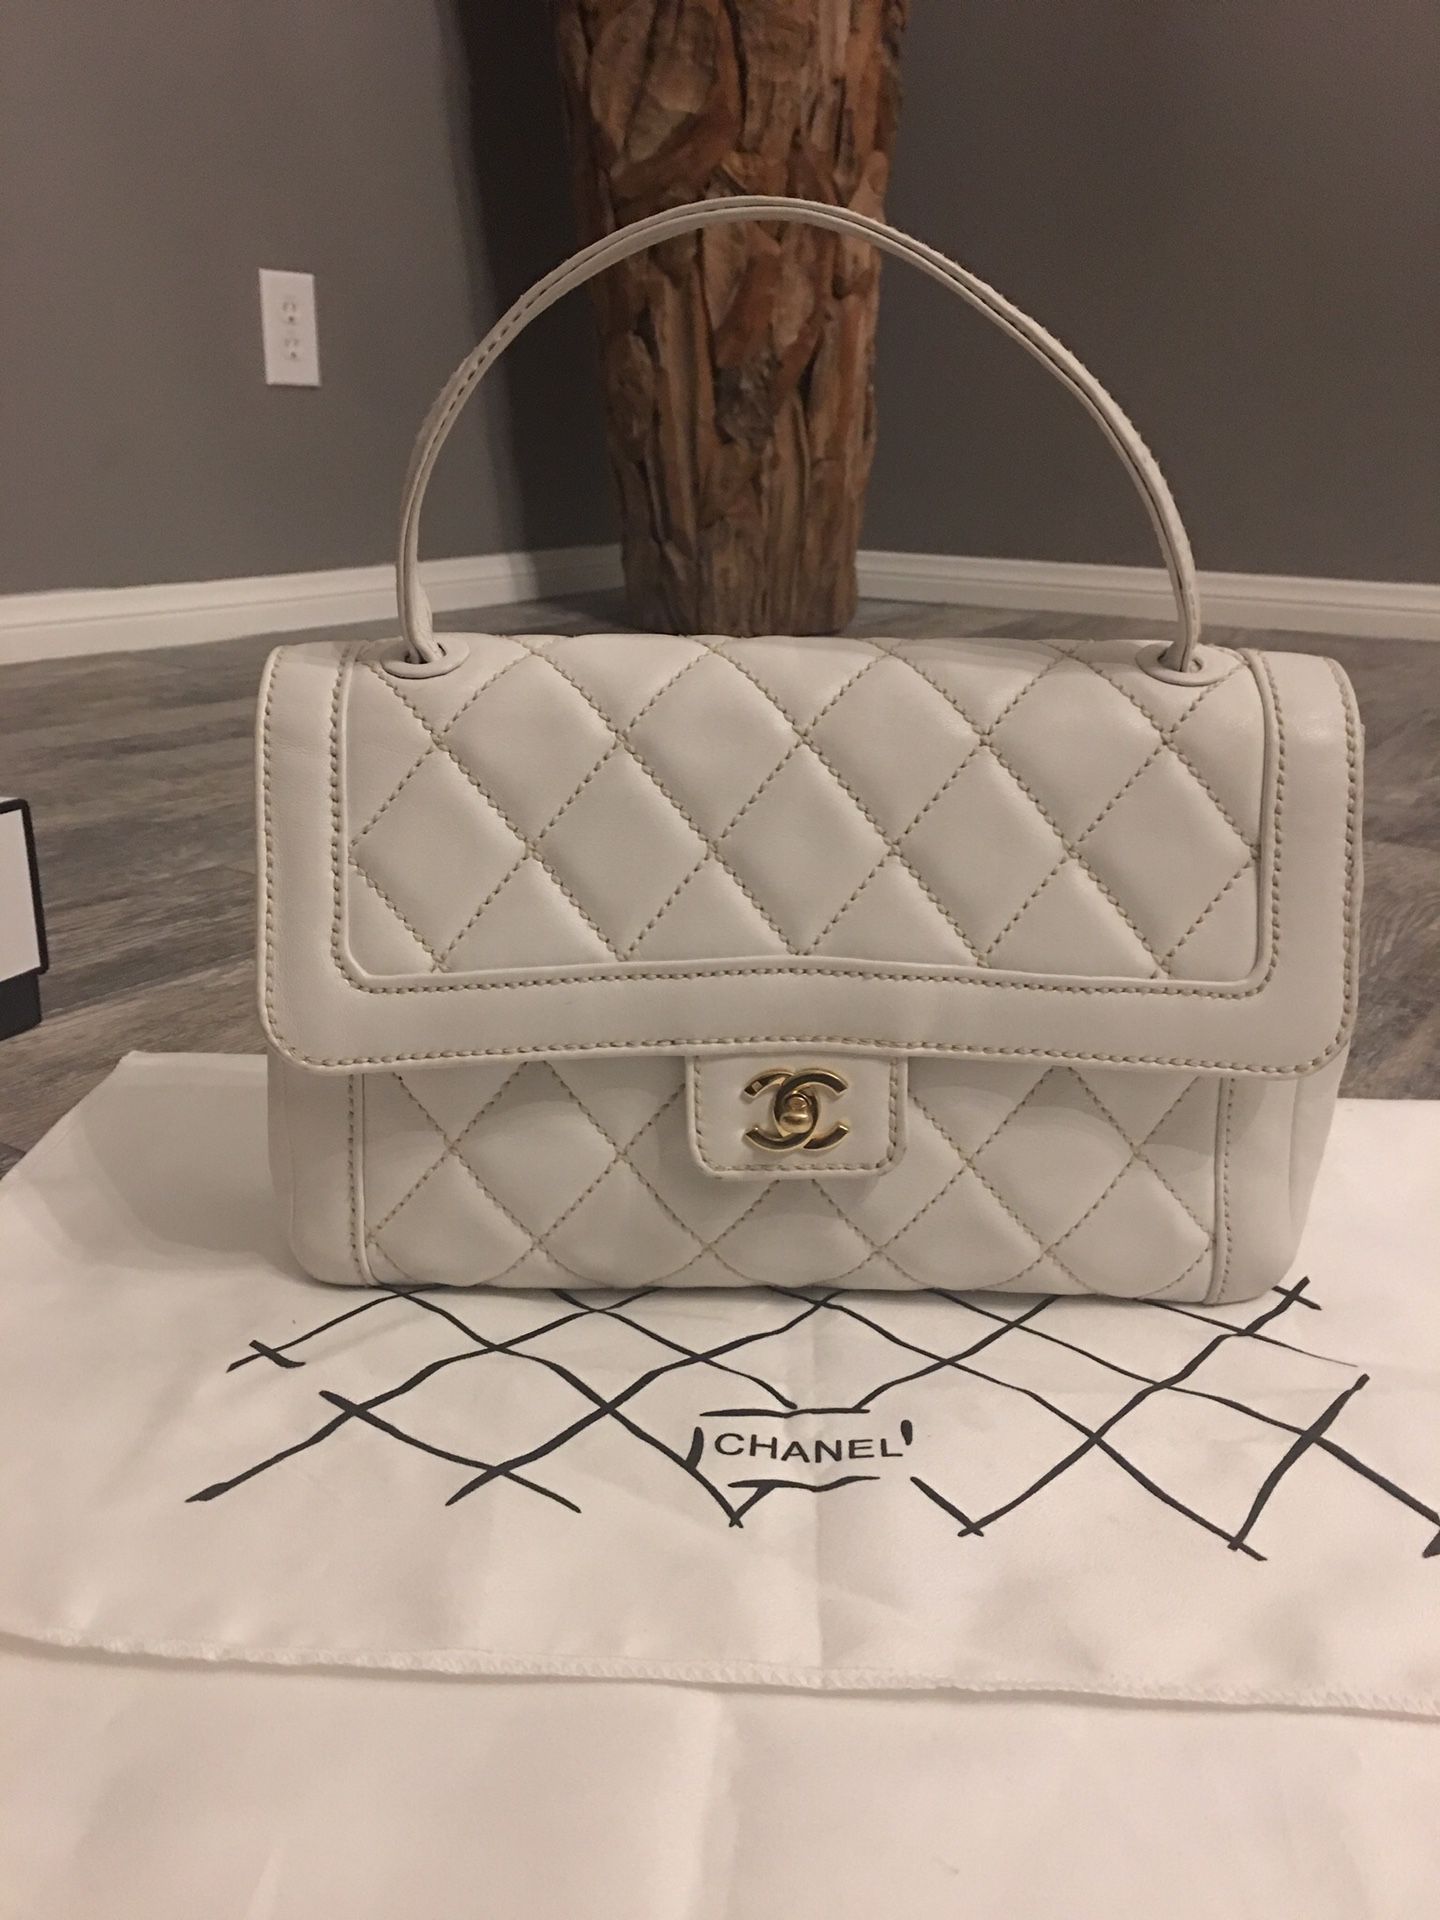 Chanel bag Authentic large size